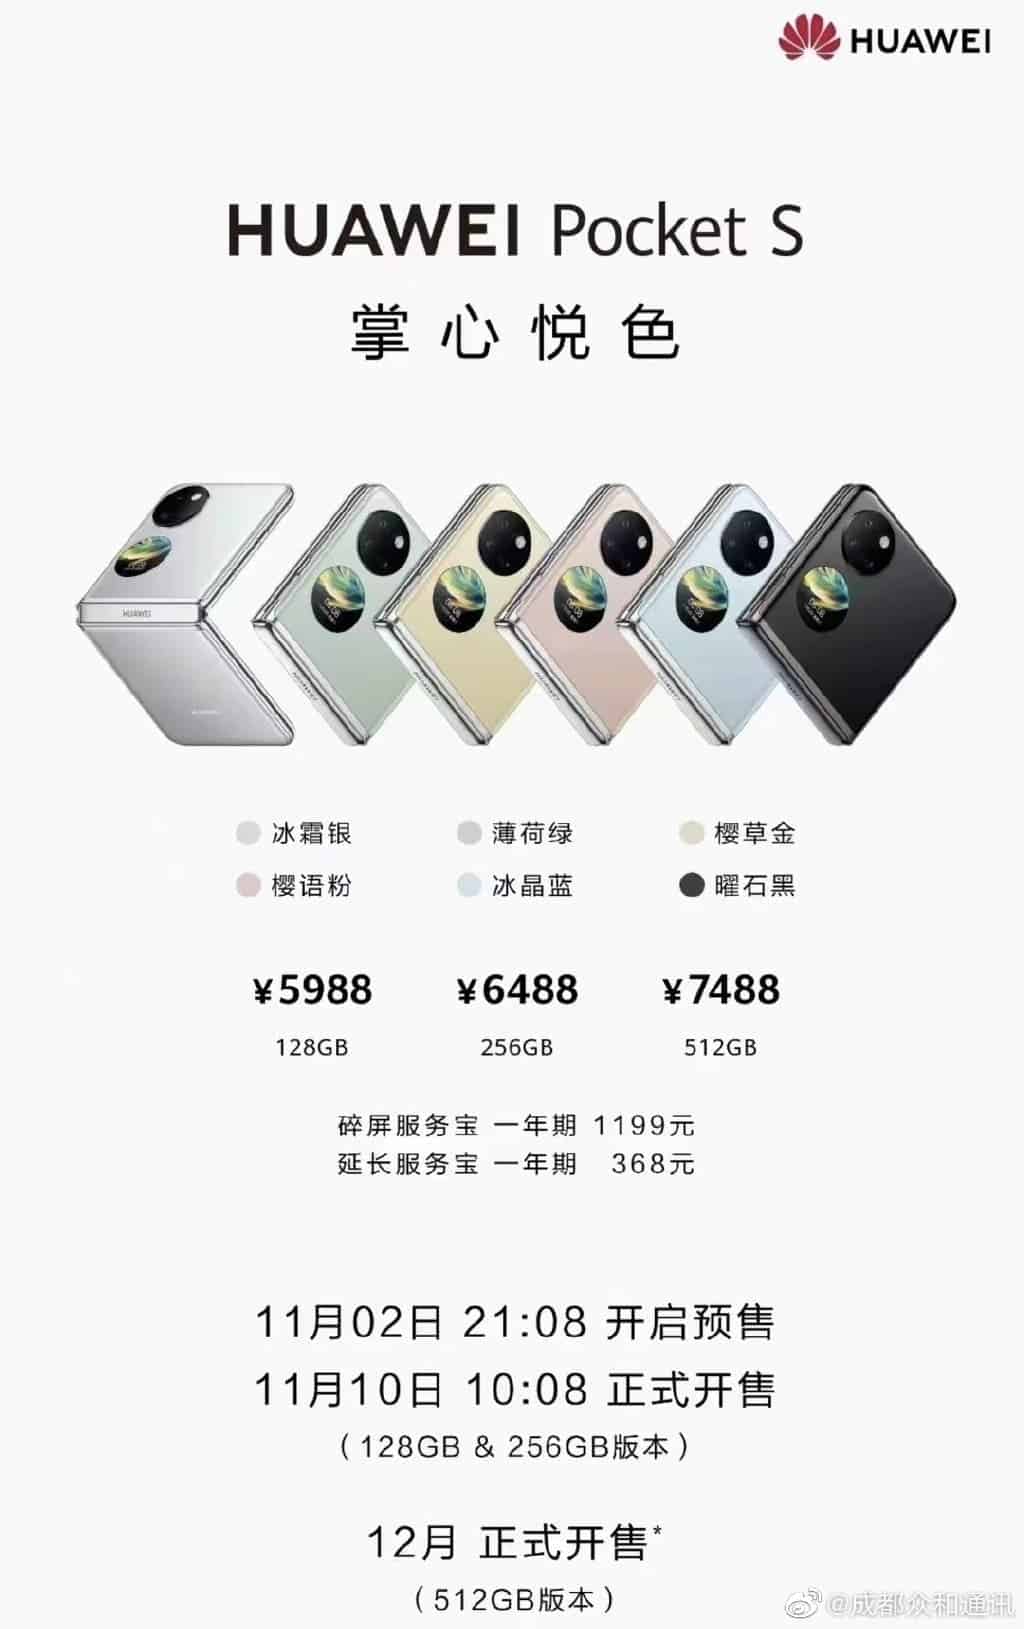 Huawei clamshell phone